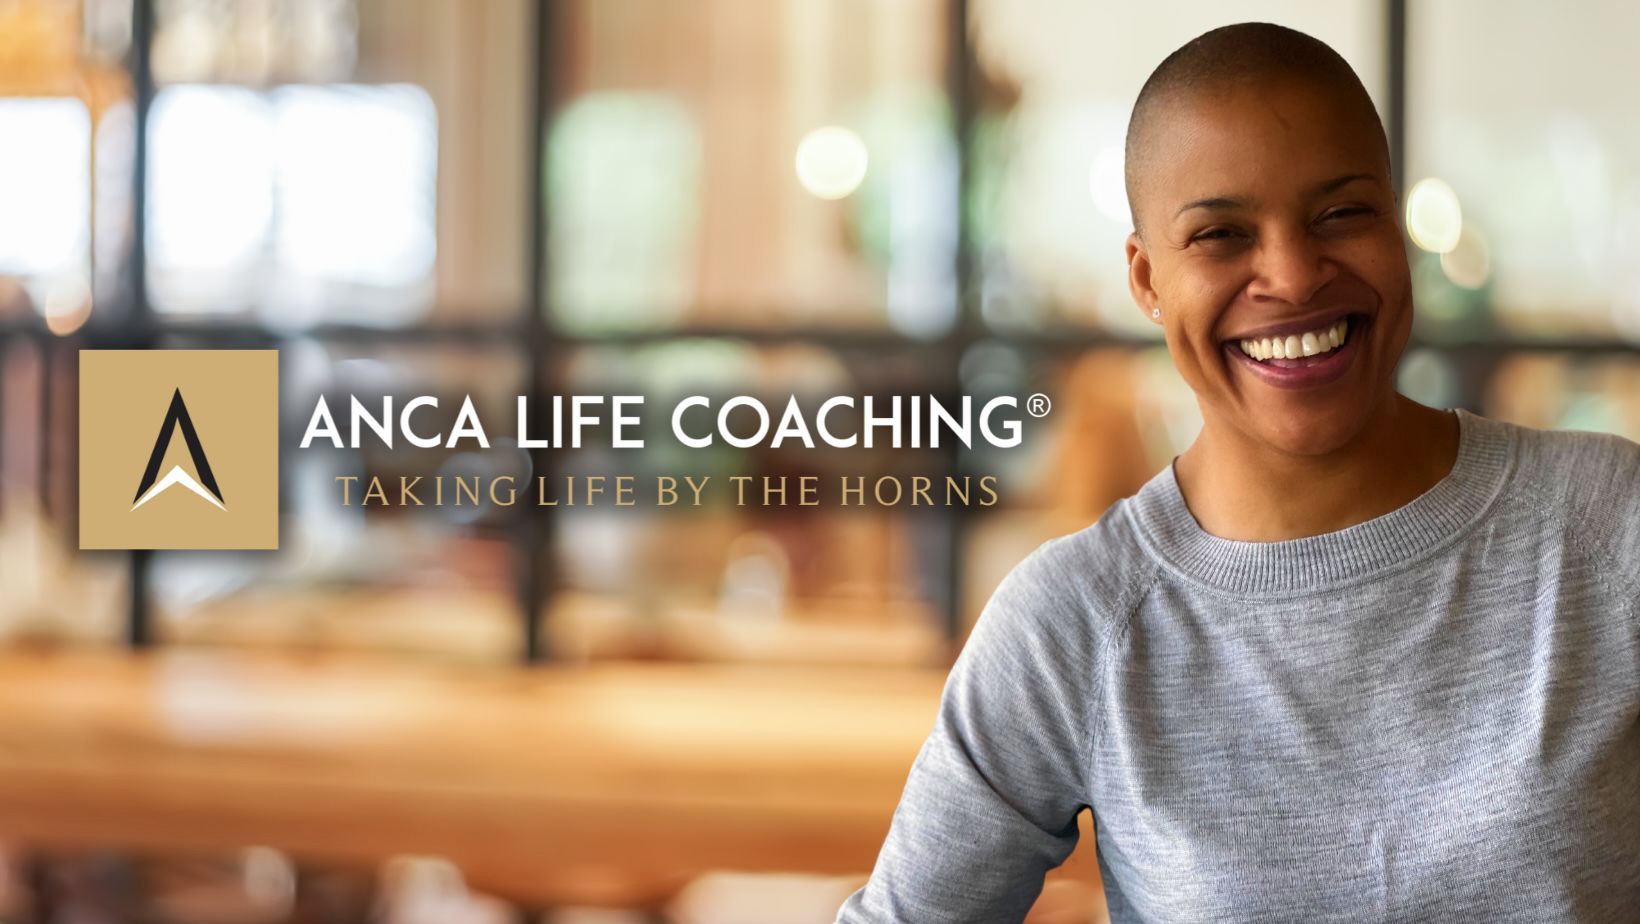 ANCA Life Coaching Ltd